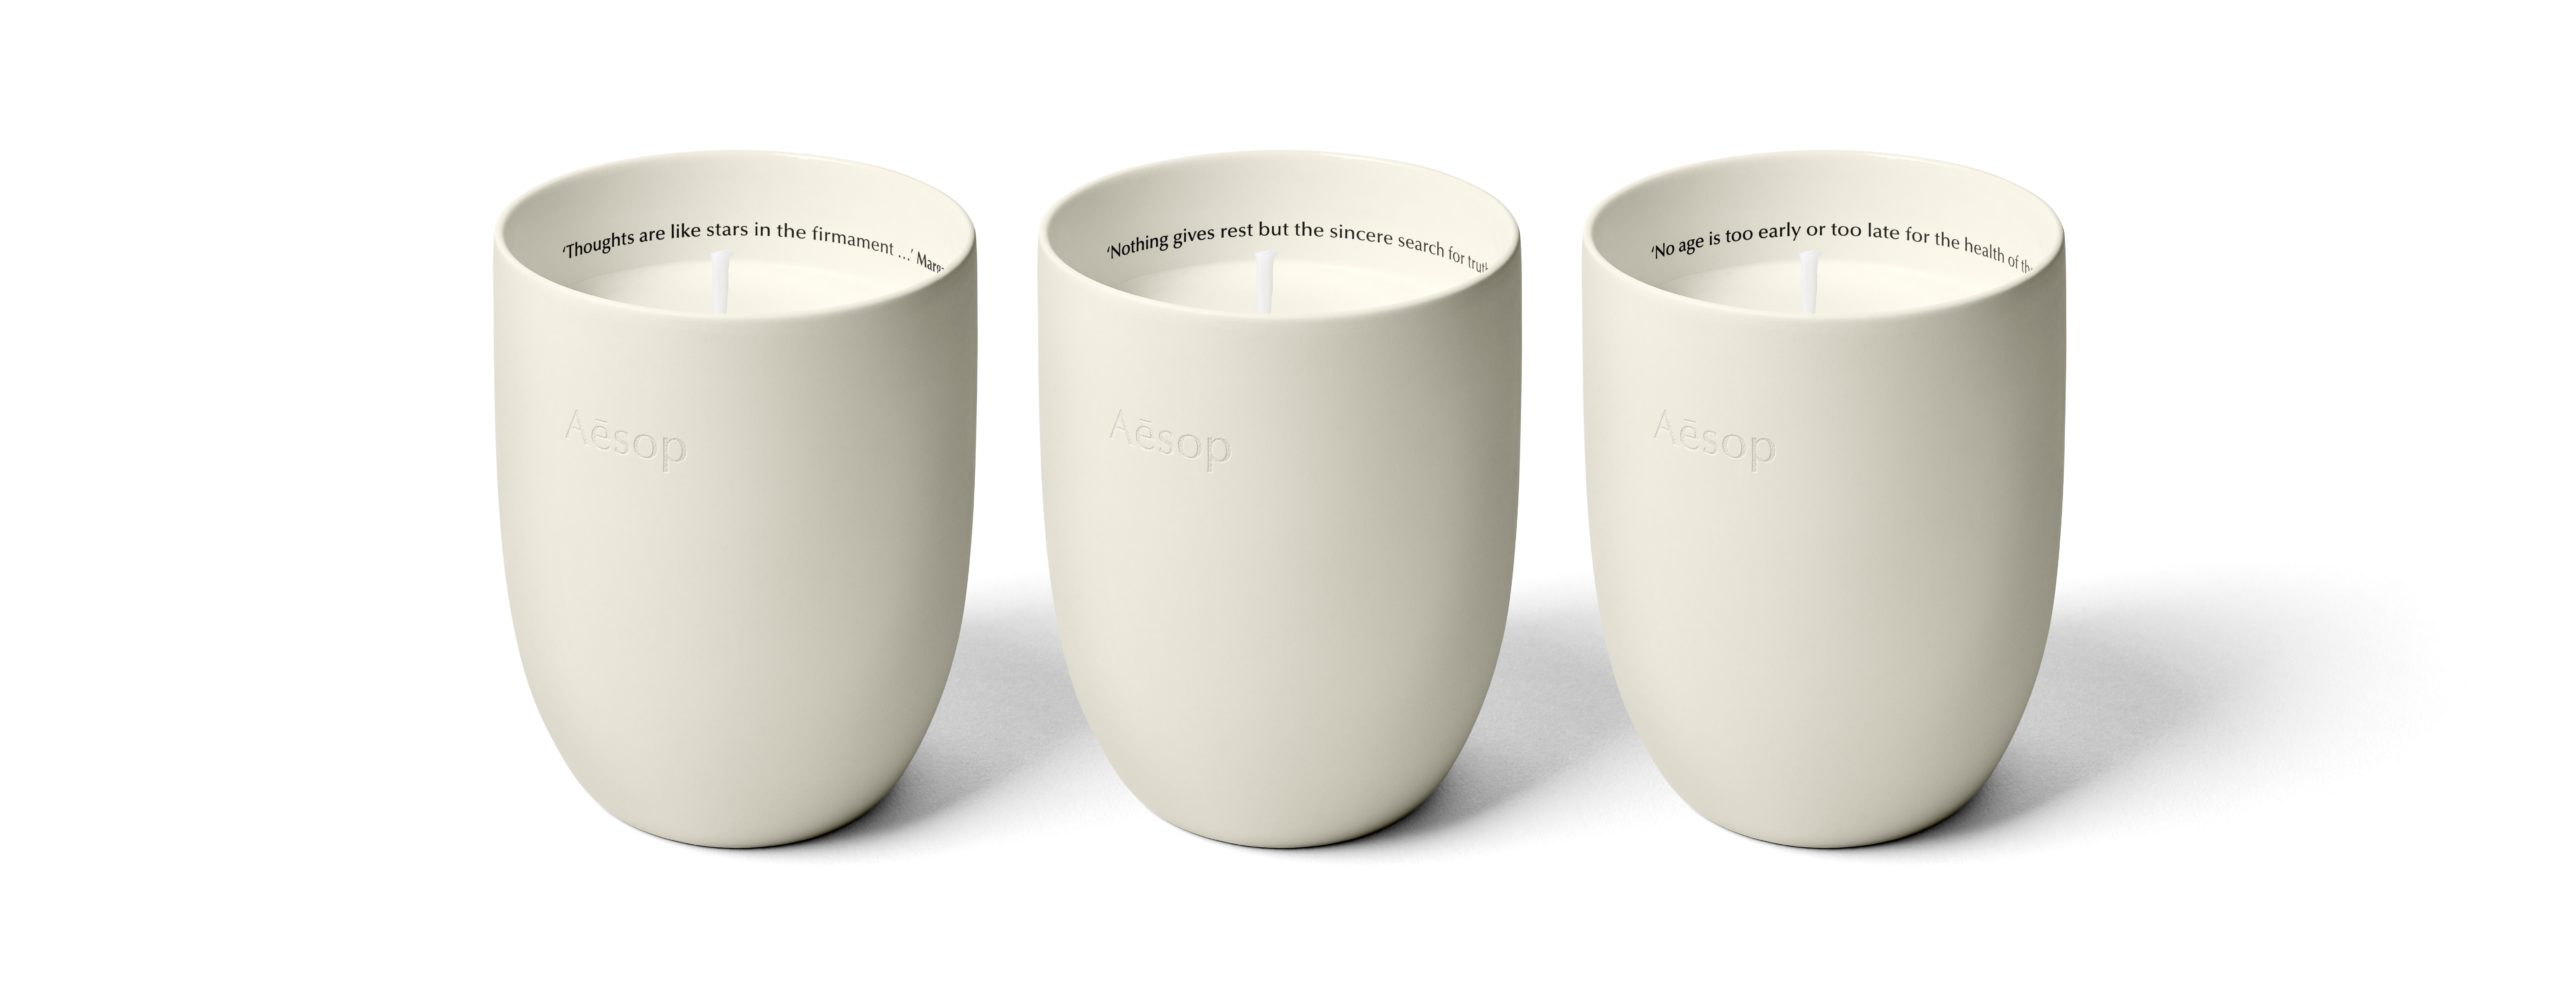 Aesop launches Aromatique Candles | Them magazine